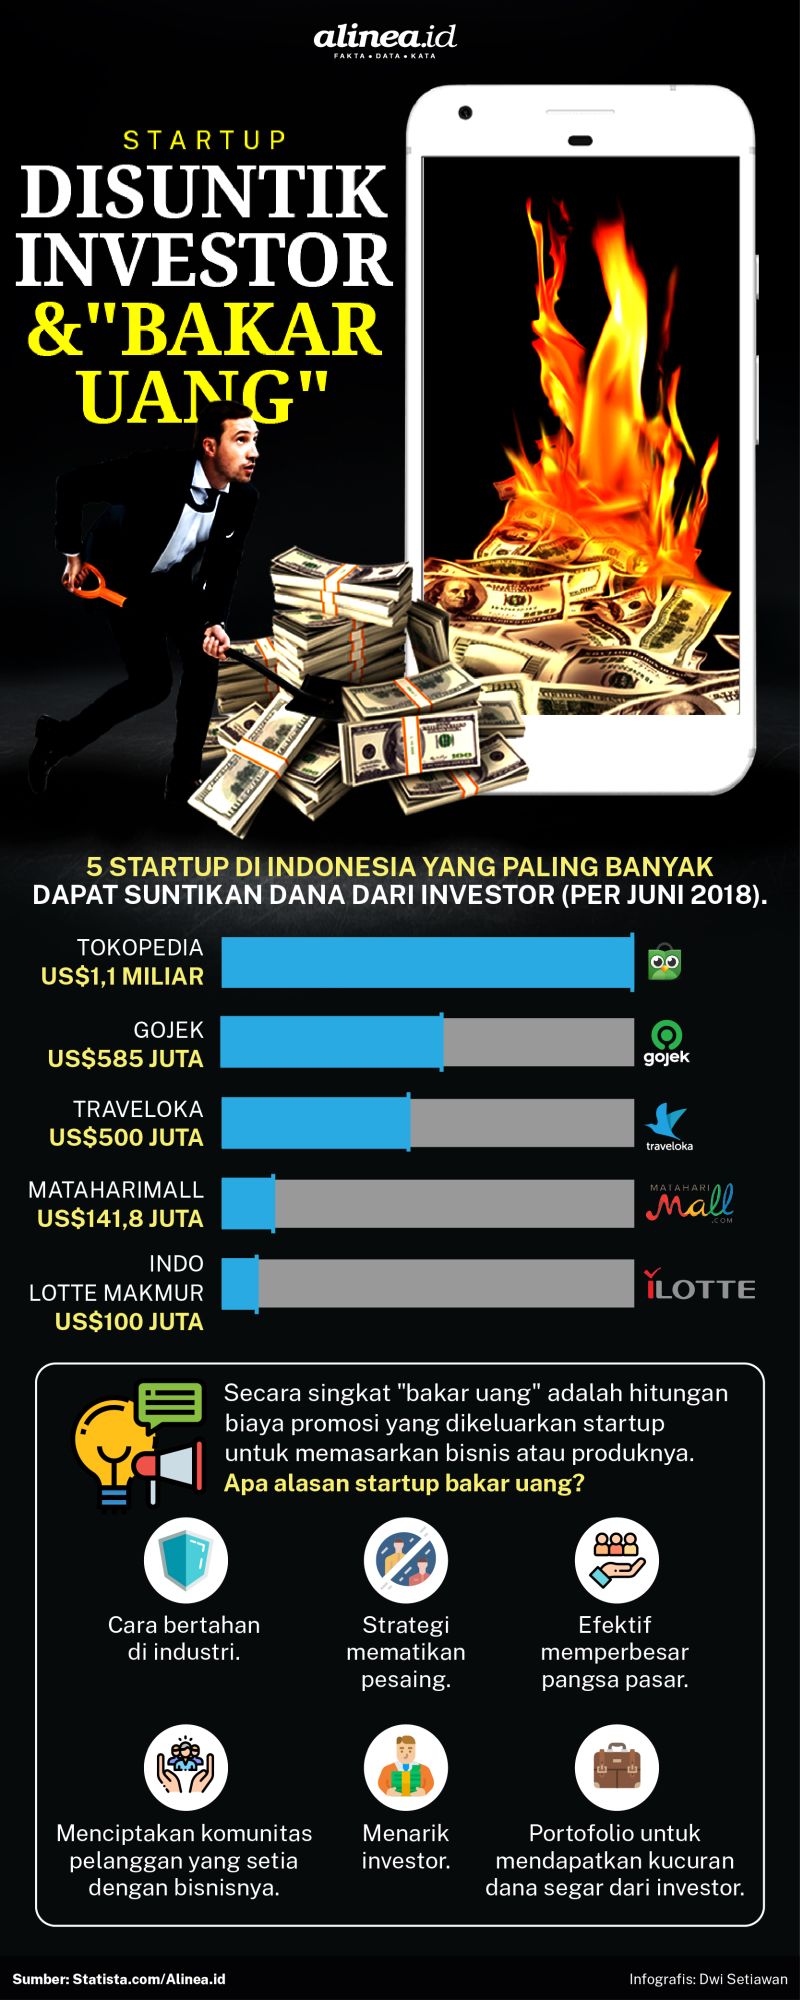 Ada sejumlah alasan mengapa startup melakukan bakar uang. Alinea.id/Dwi Setiawan.